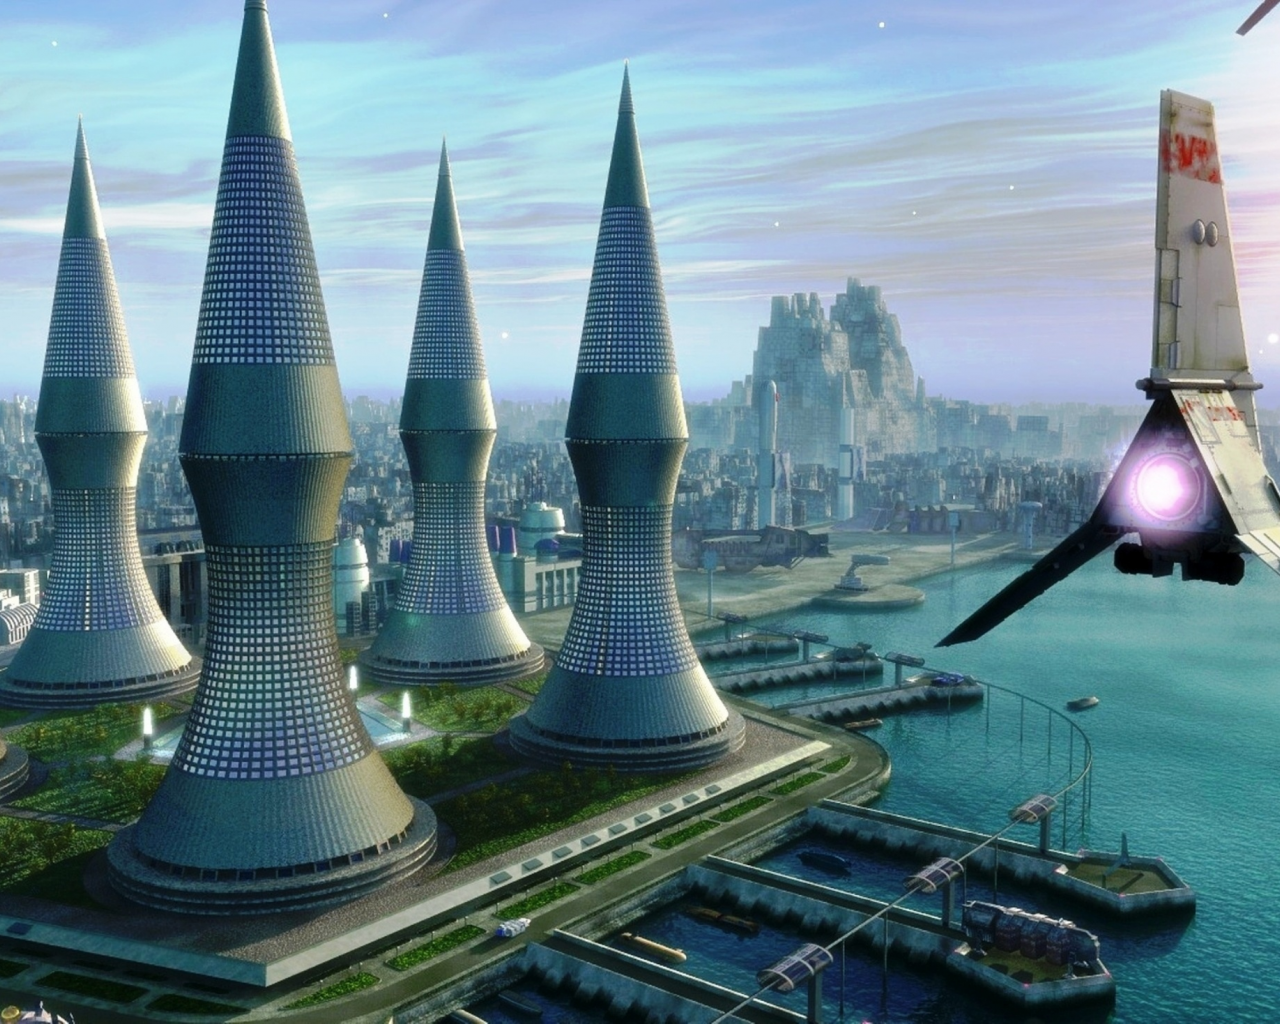 будущее, панорама города